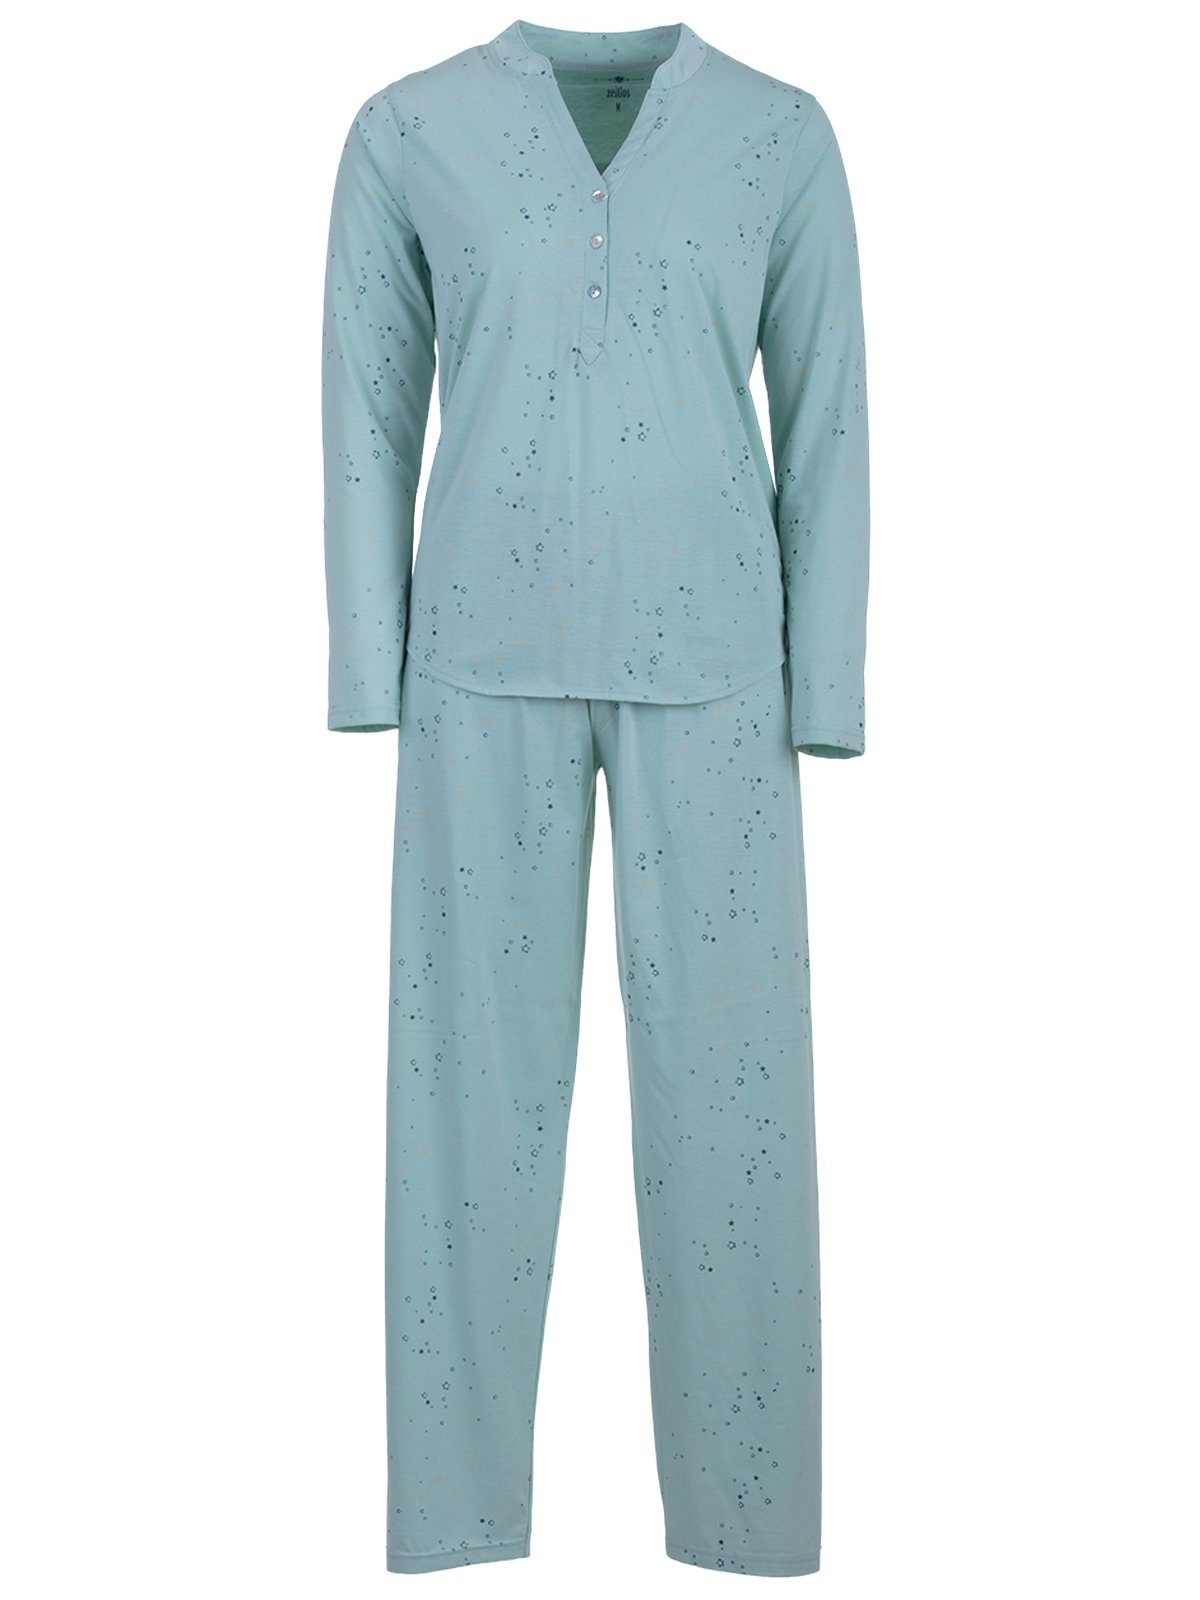 Sterne - Langarm Set Schlafanzug Pyjama zeitlos mint